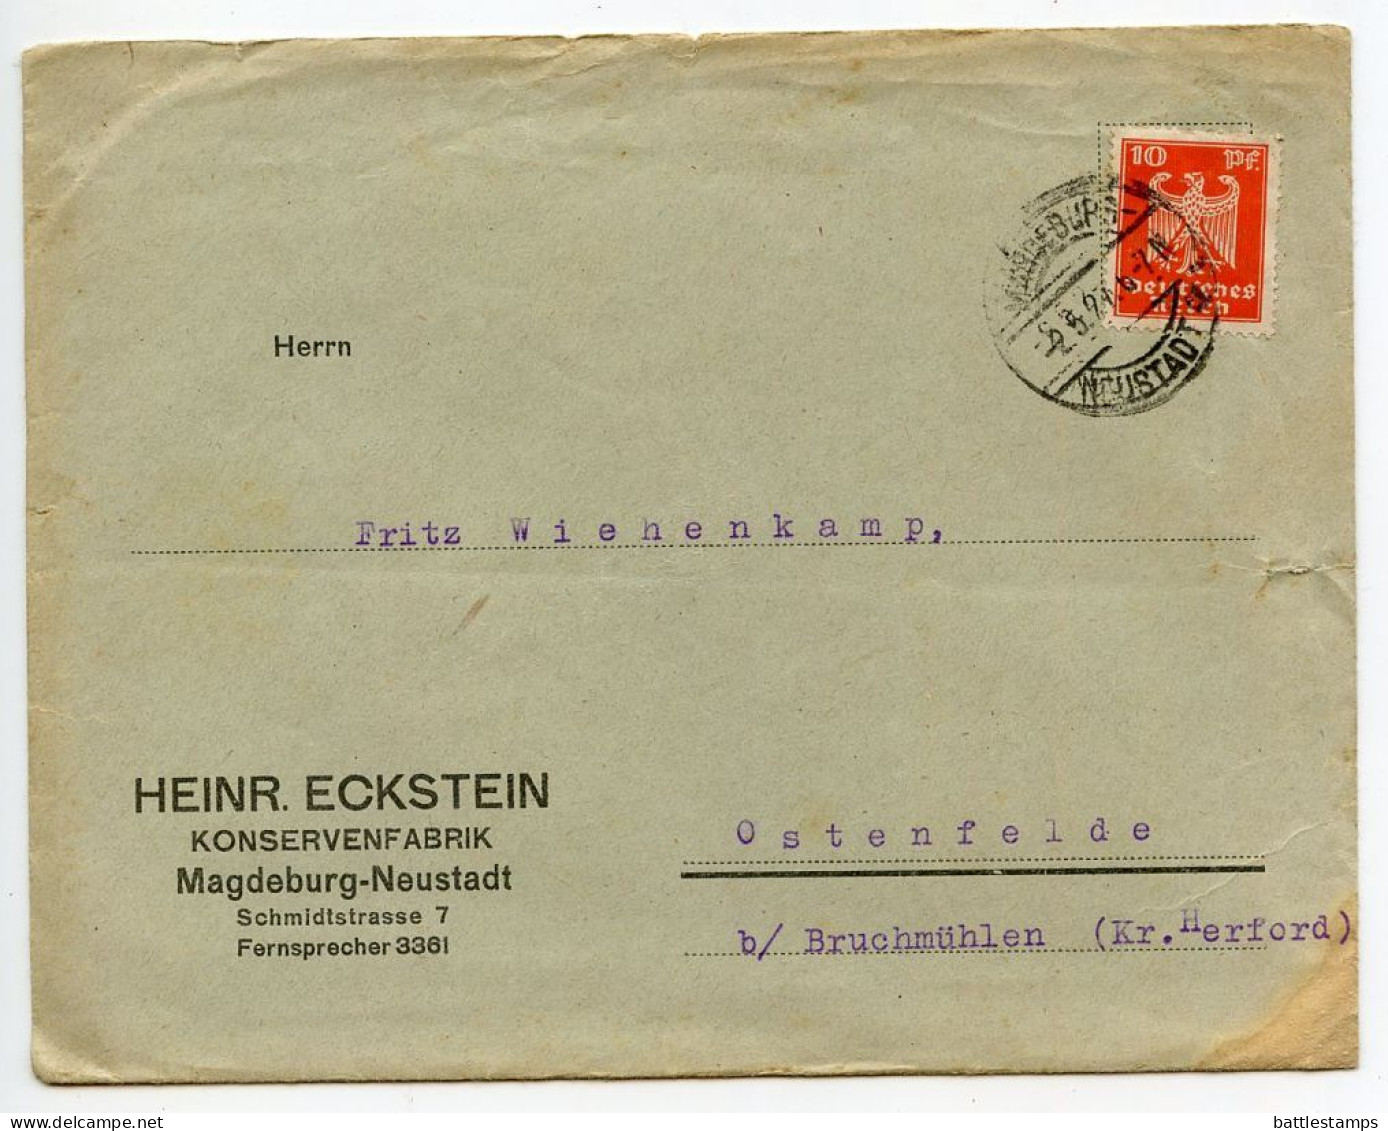 Germany 1927 Cover W/ Invoice & Zahlkarte; Magdeburg-Neustadt - Heinr. Eckstein, Konservenfabrik; 10pf. German Eagle - Covers & Documents